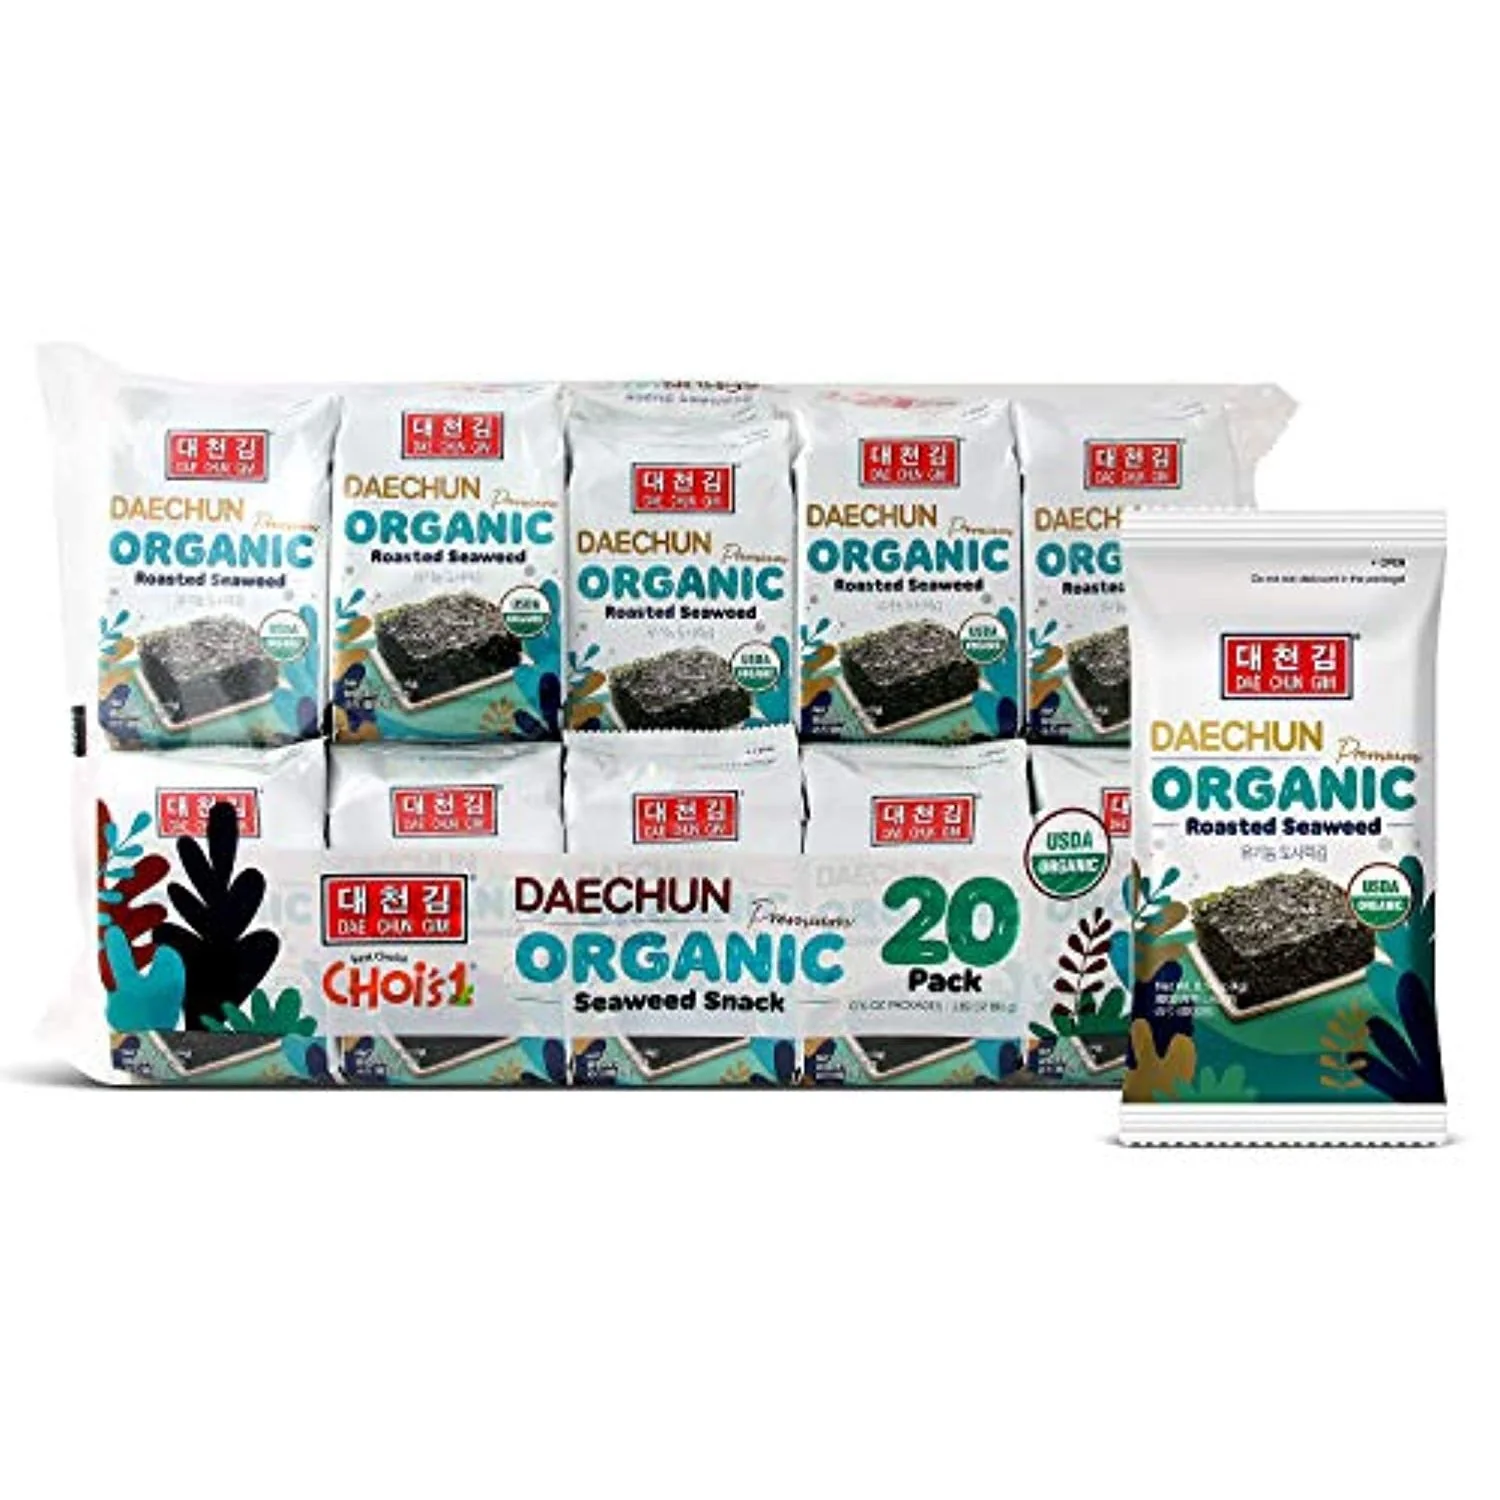 DAECHUN Organic Seaweed Snacks, Pack of 20